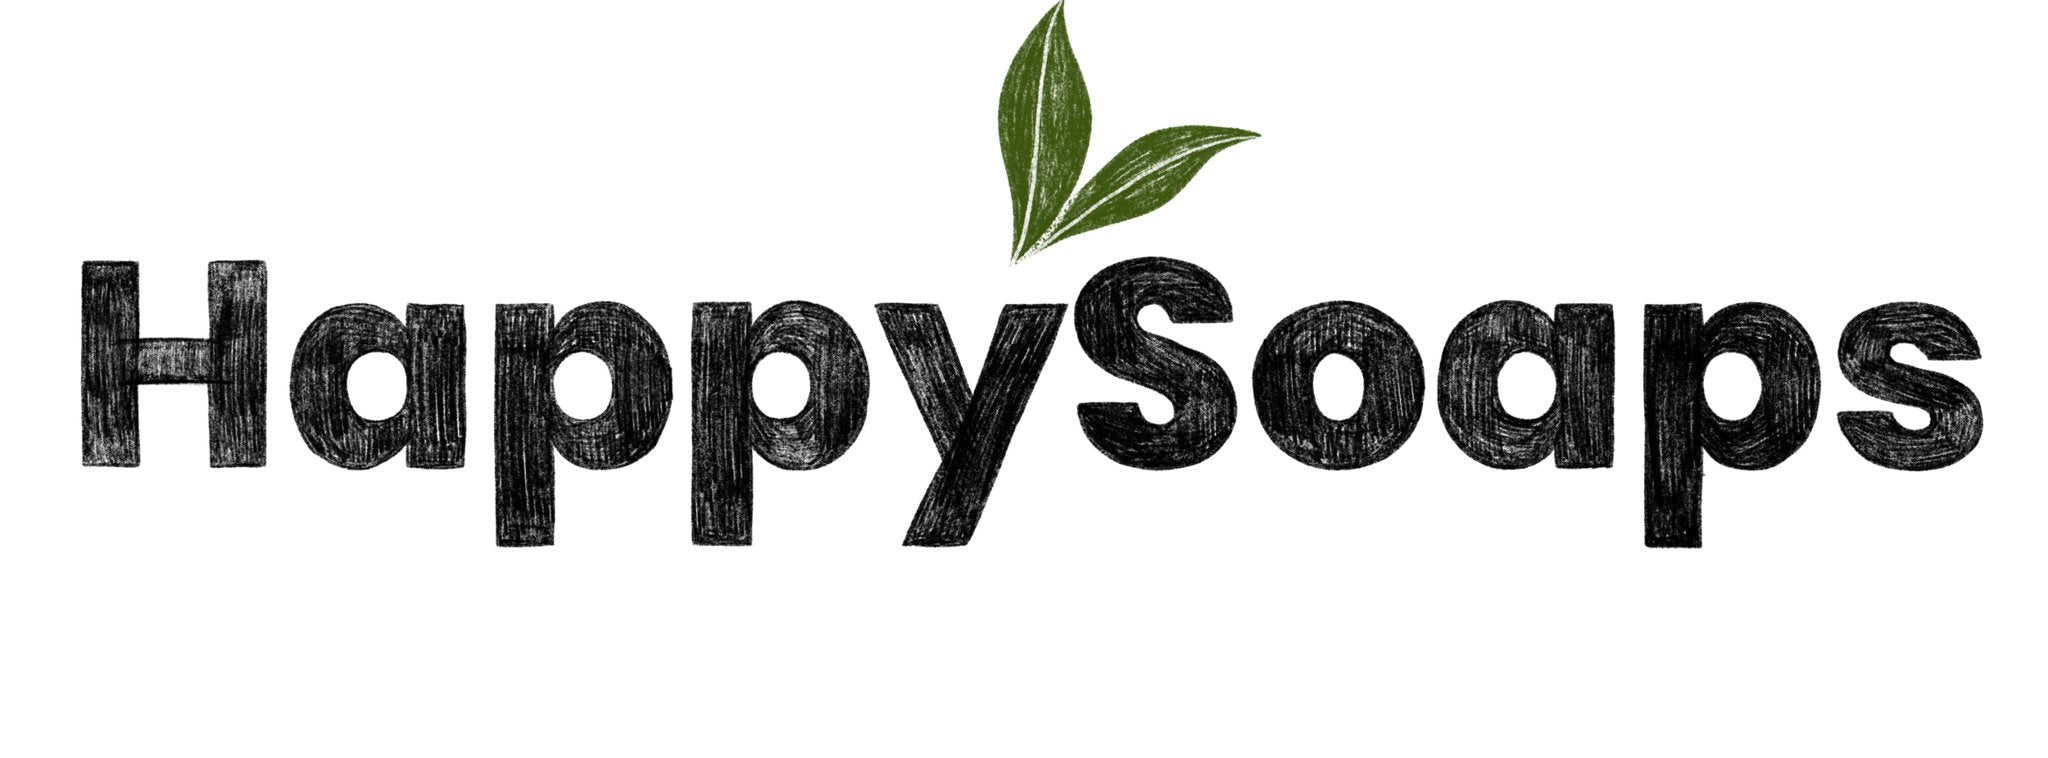 Natuurlijke Deodorant - Eucalyptus en Lemongrass - NowVitamins - HappySoaps - 100% plasticvrije cosmetica - 8720256109044